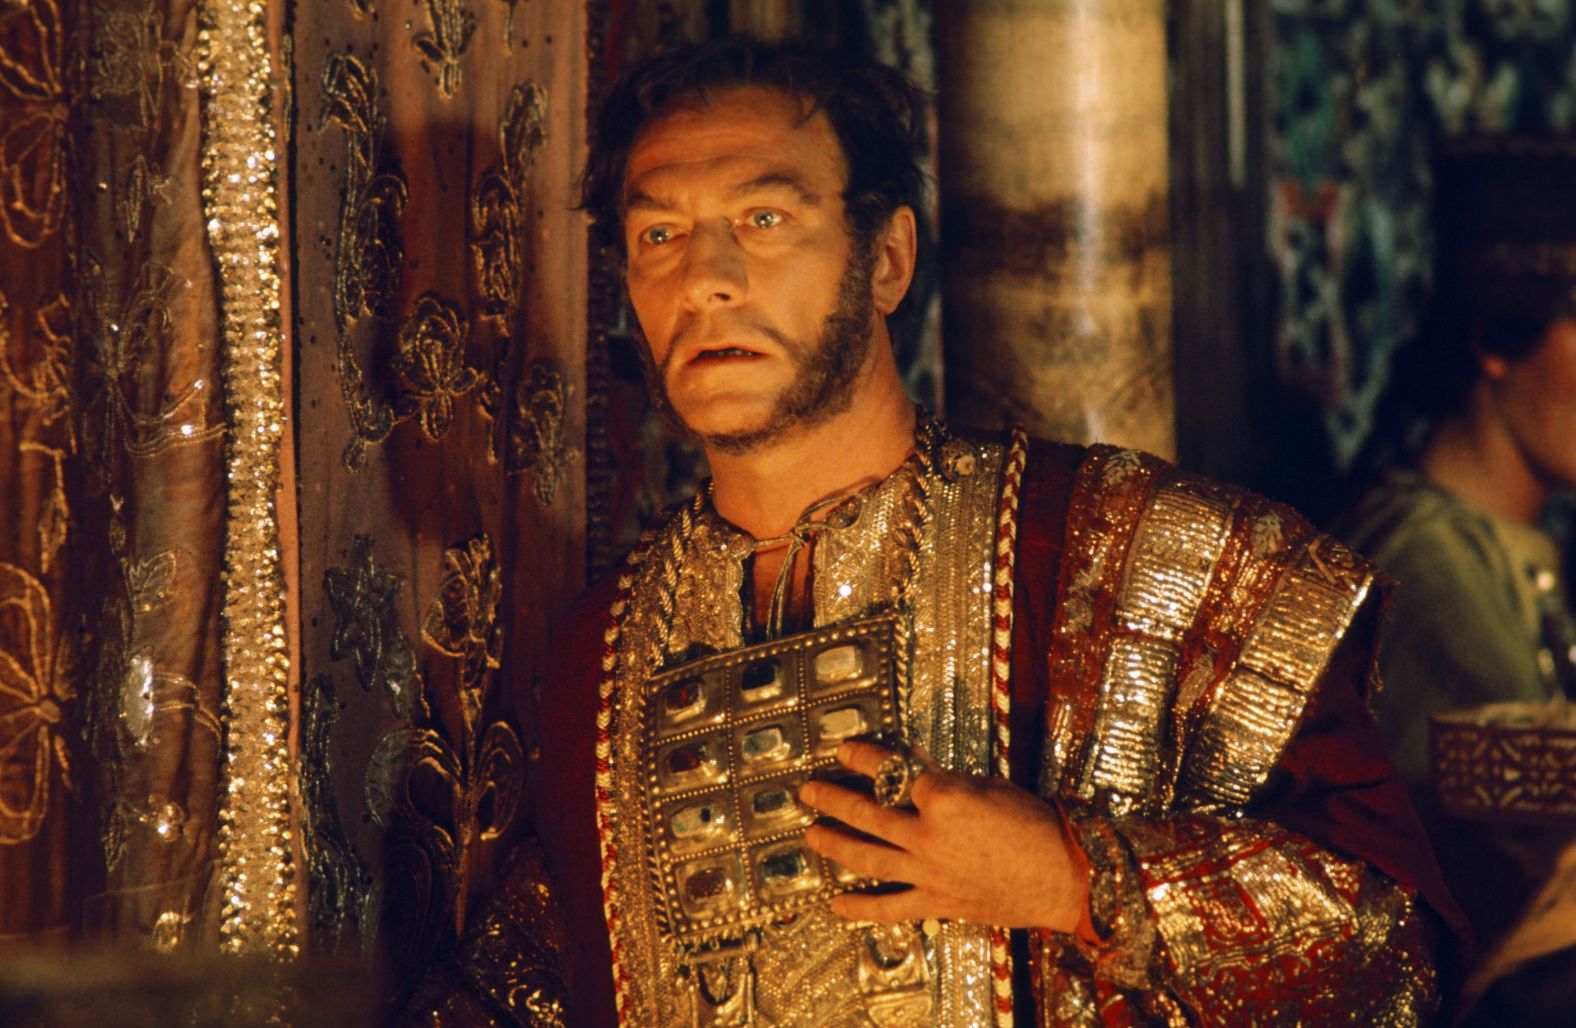 Plummer plays Herod Antipas in the 1977 miniseries "Jesus of Nazareth."